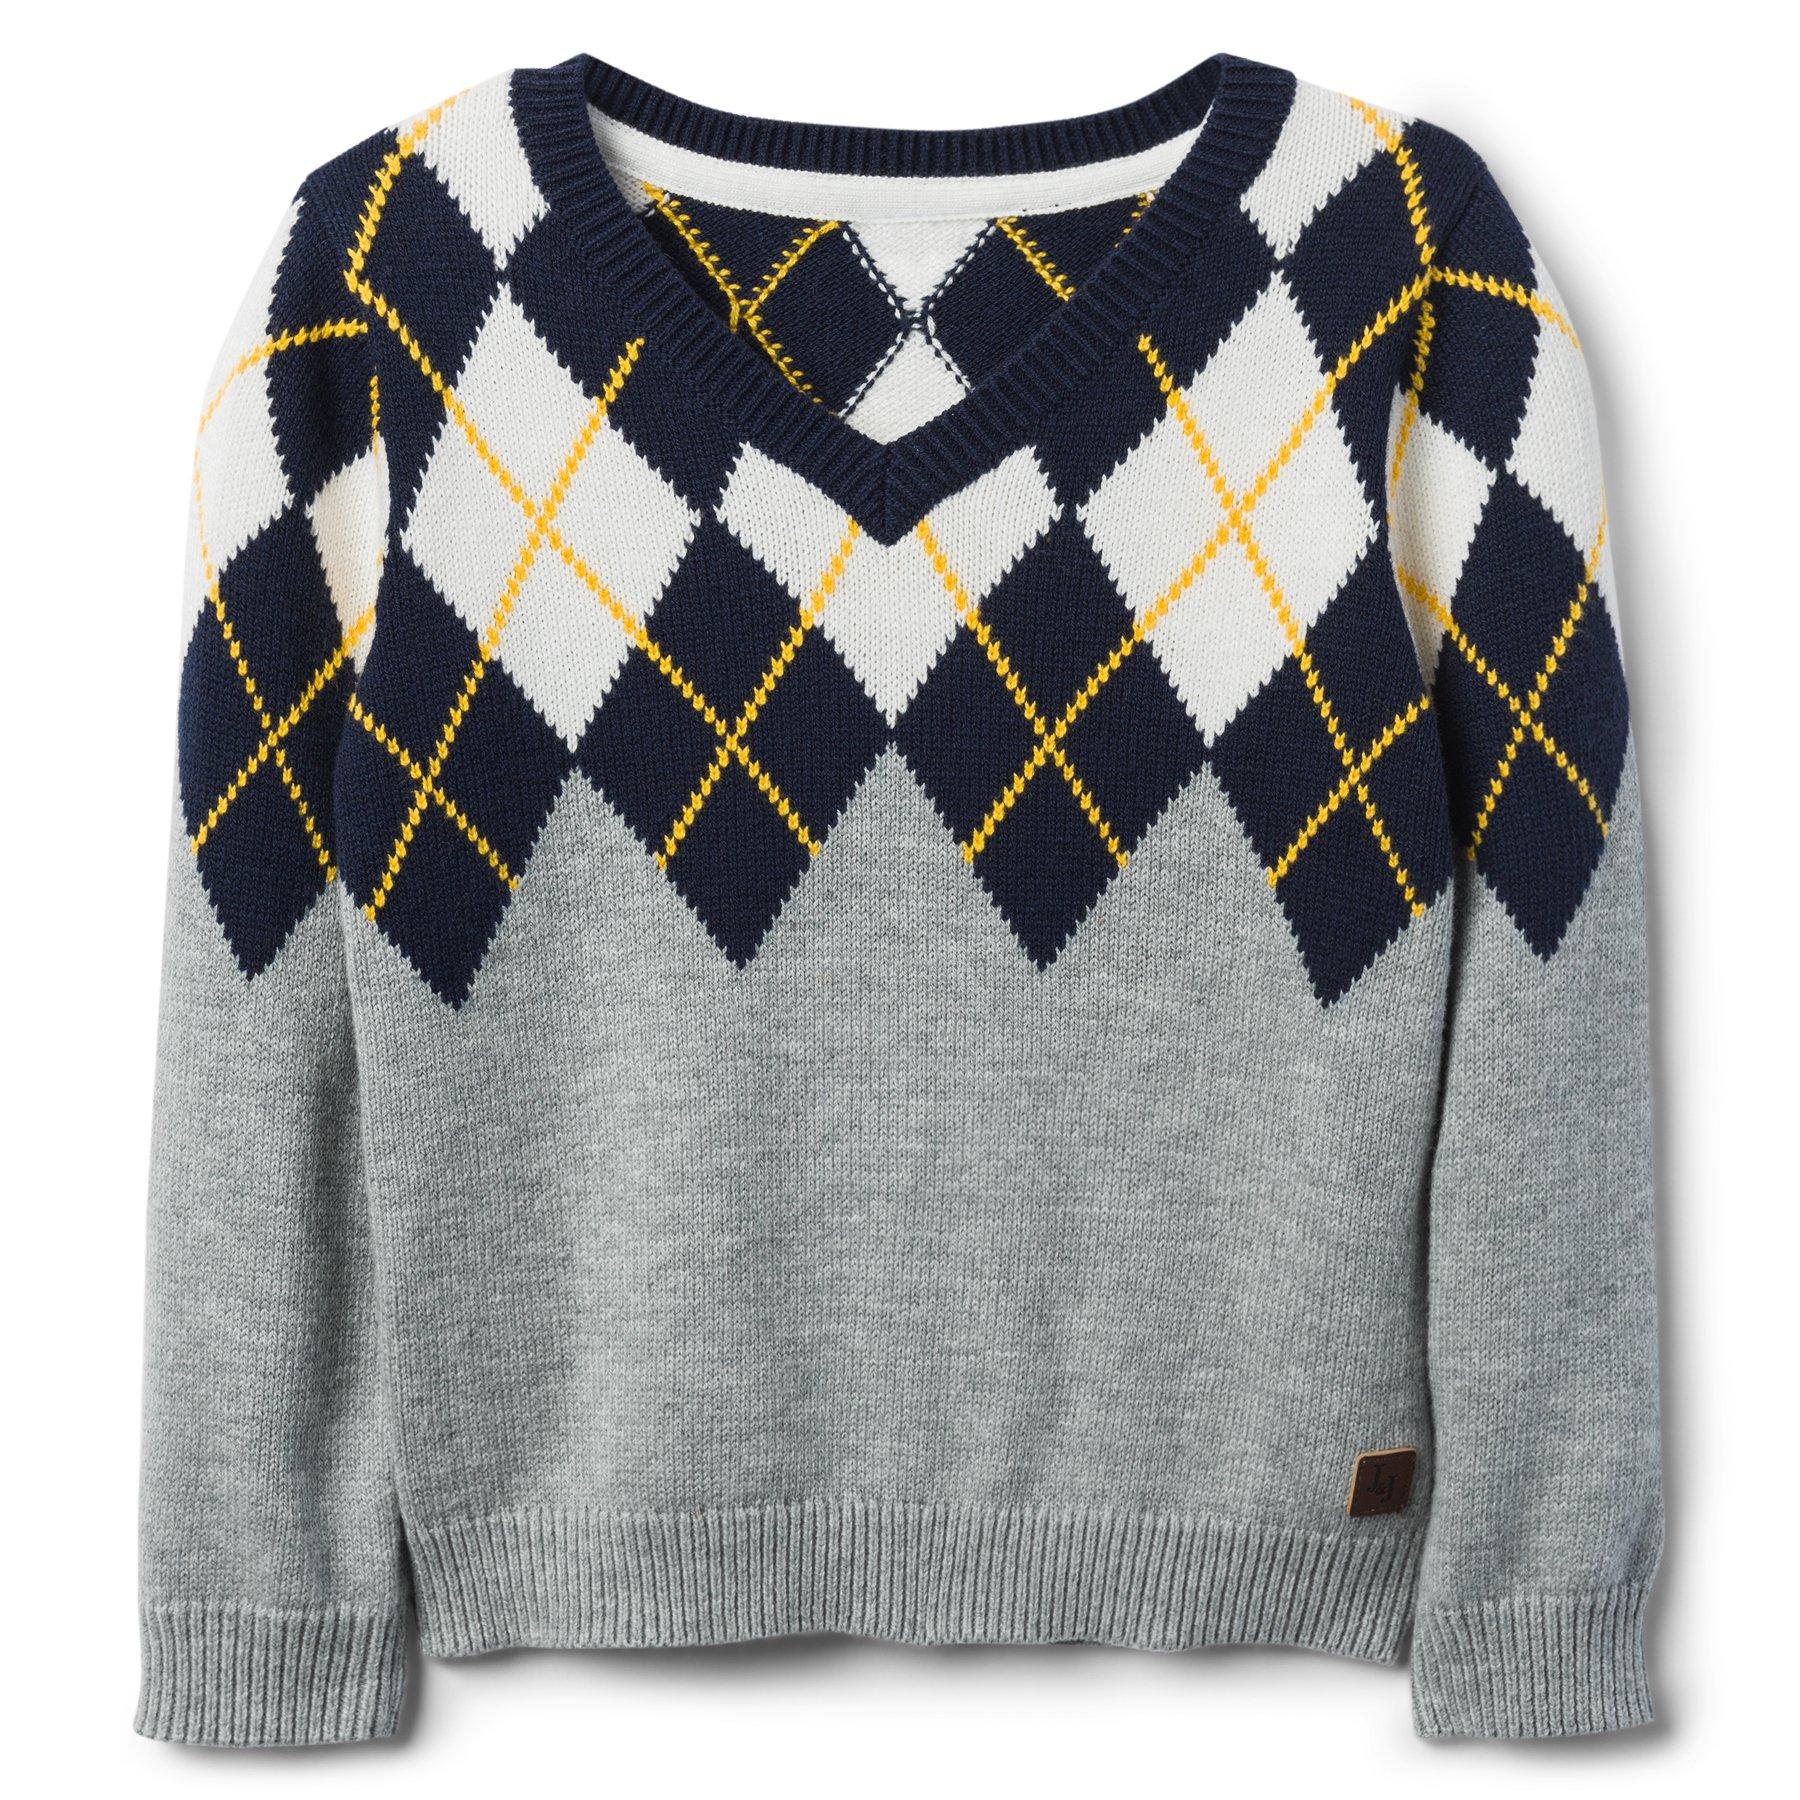 Argyle Sweater 